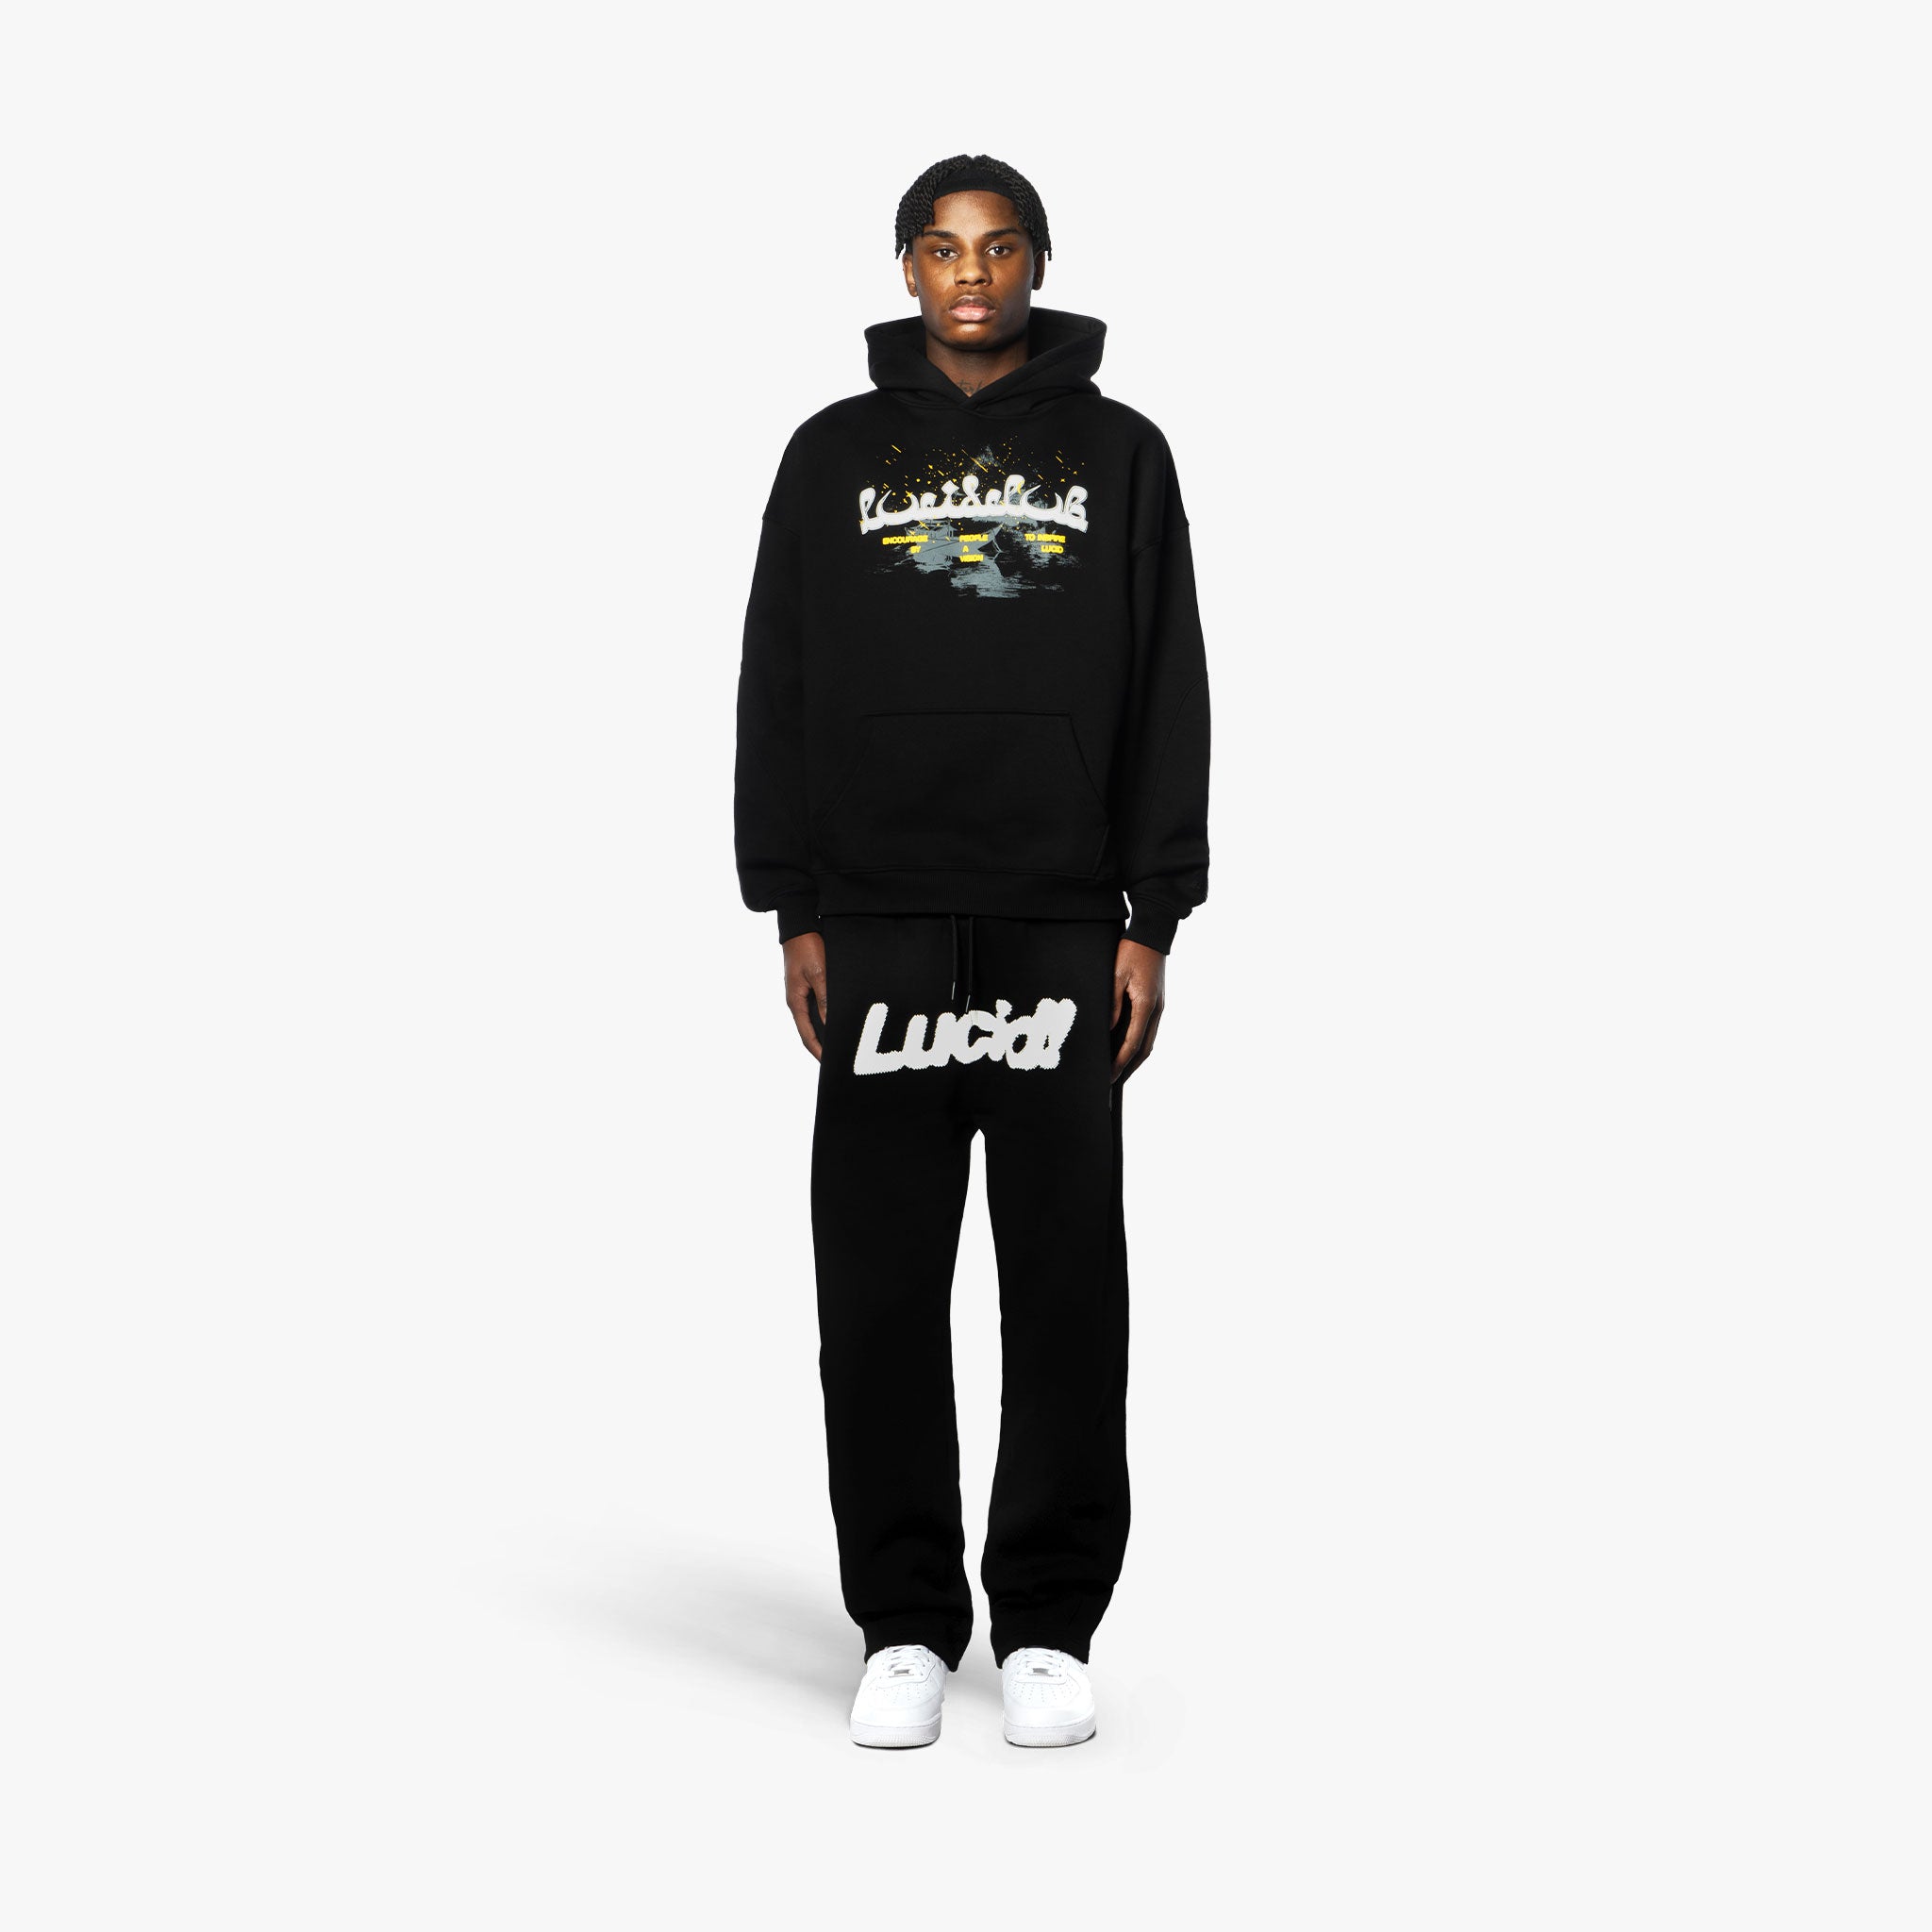 Lucid! Sweatpants Black/White - Lucid Club